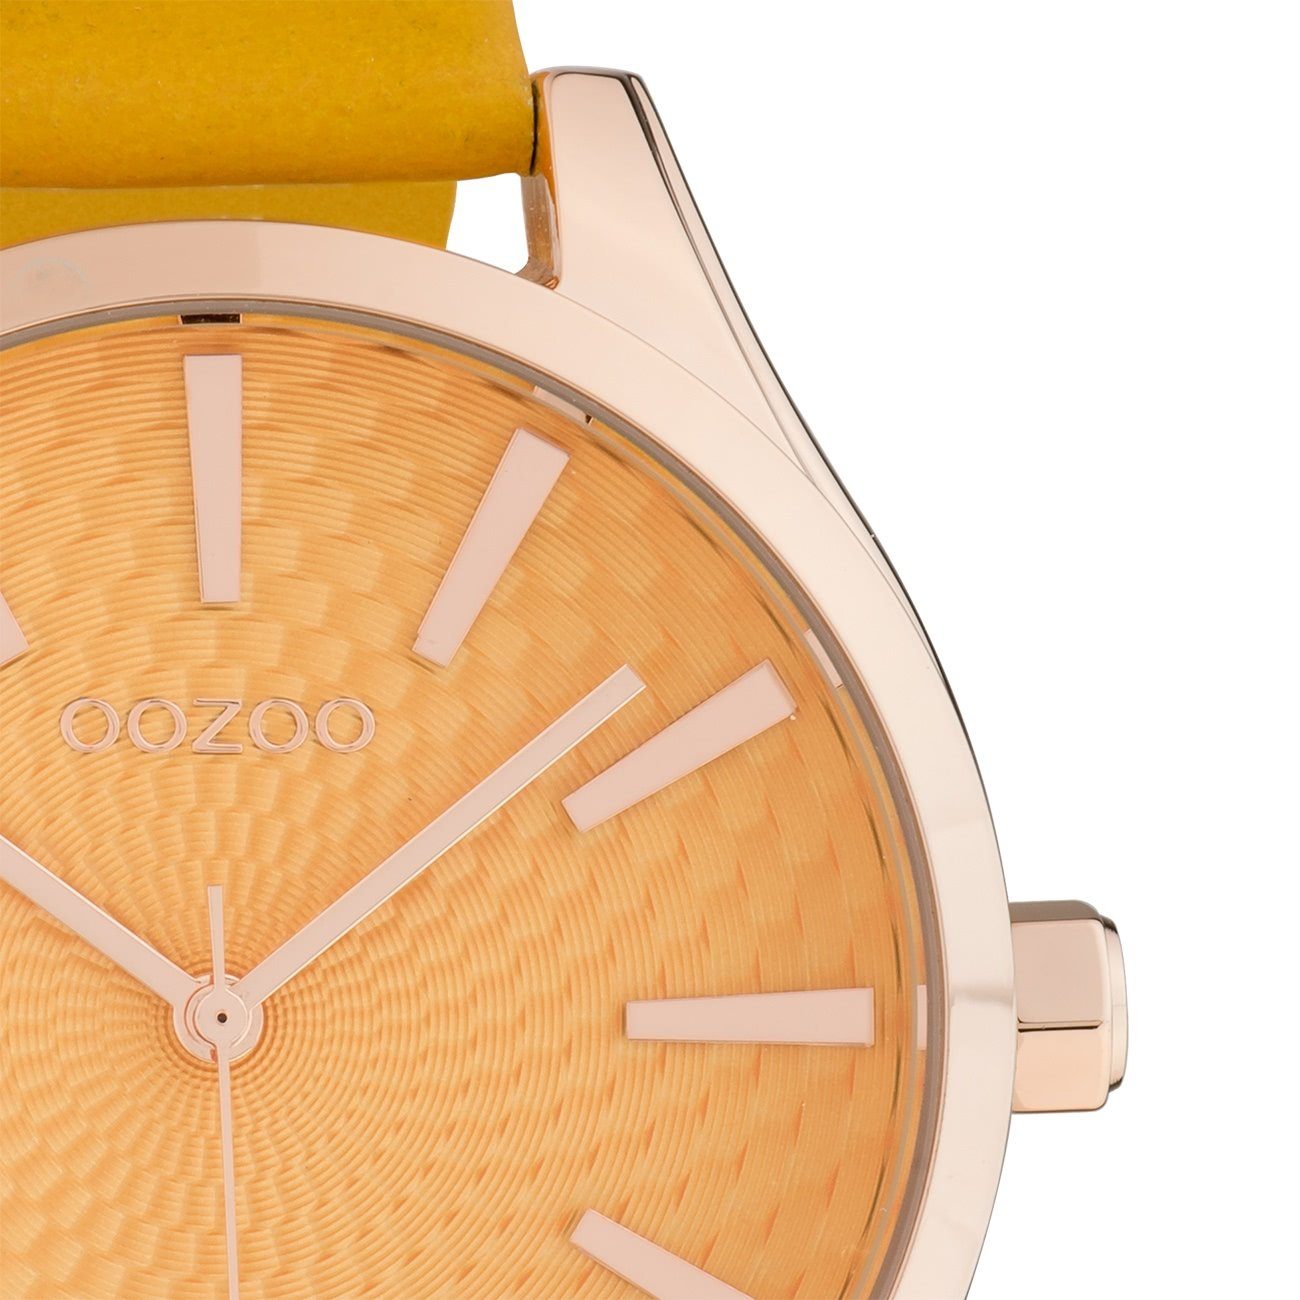 Lederarmband OOZOO gelb, Fashion Timepieces, Damen groß Oozoo Damenuhr rund, 42mm), Quarzuhr Armbanduhr OOZOO (ca.